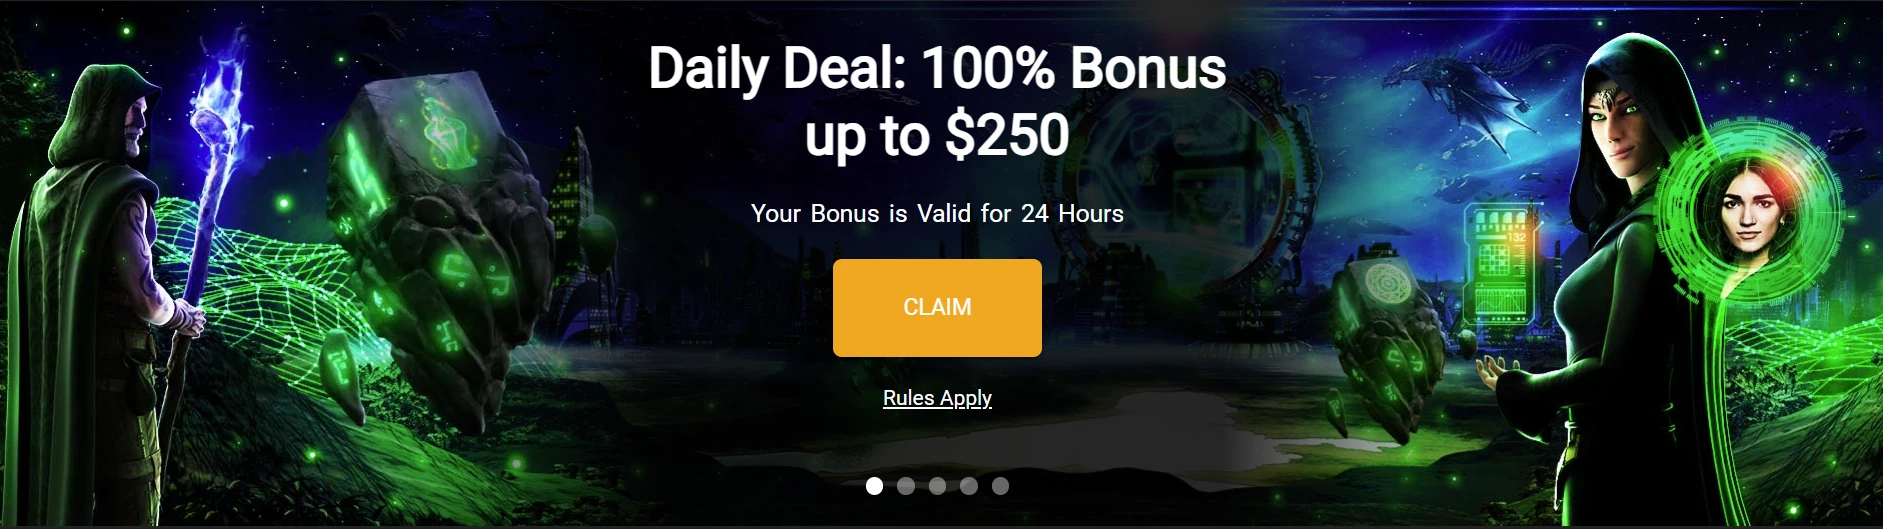 Jackpot City Casino Daily Deals